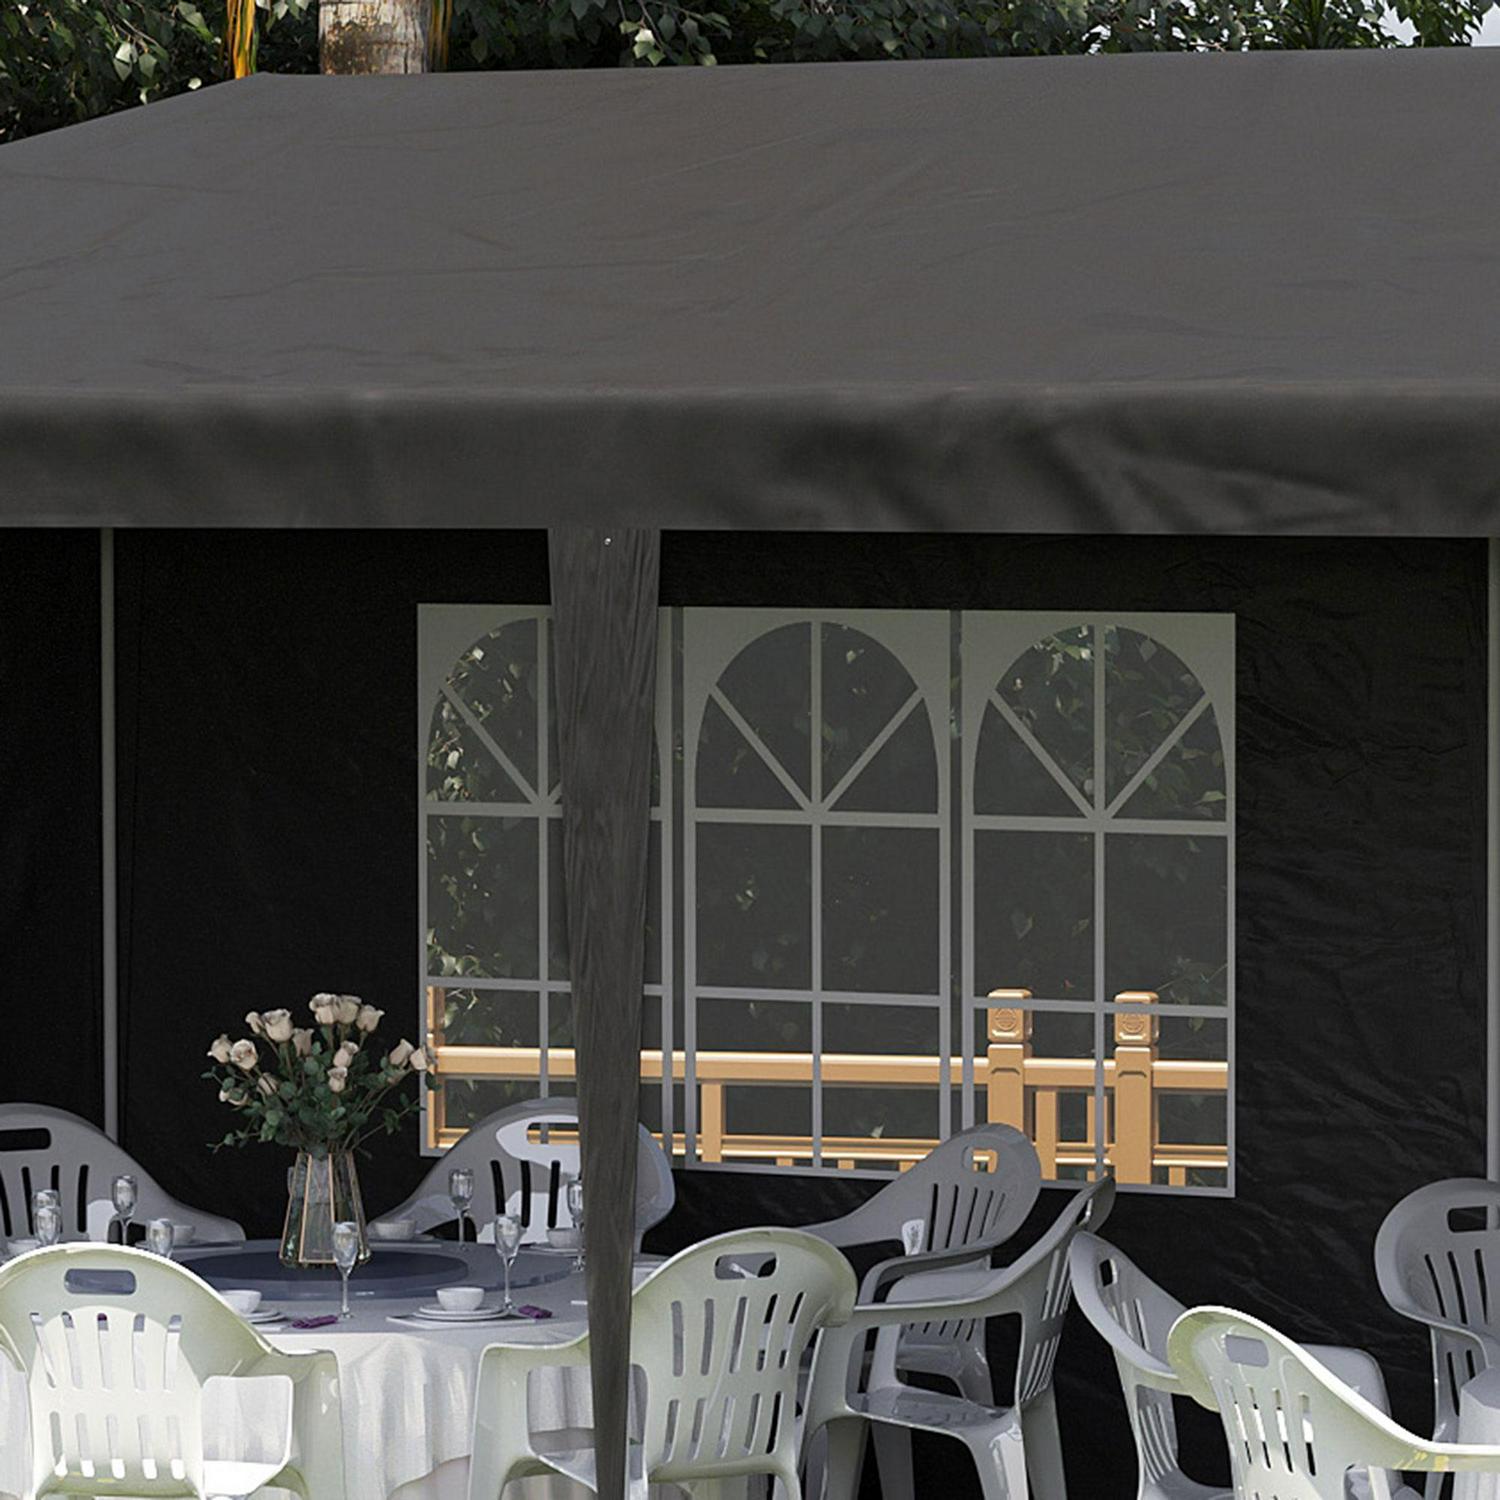 6m X 3m Gazebo Canopy Garden BBQ Party Patio Tent Camping Shade Black